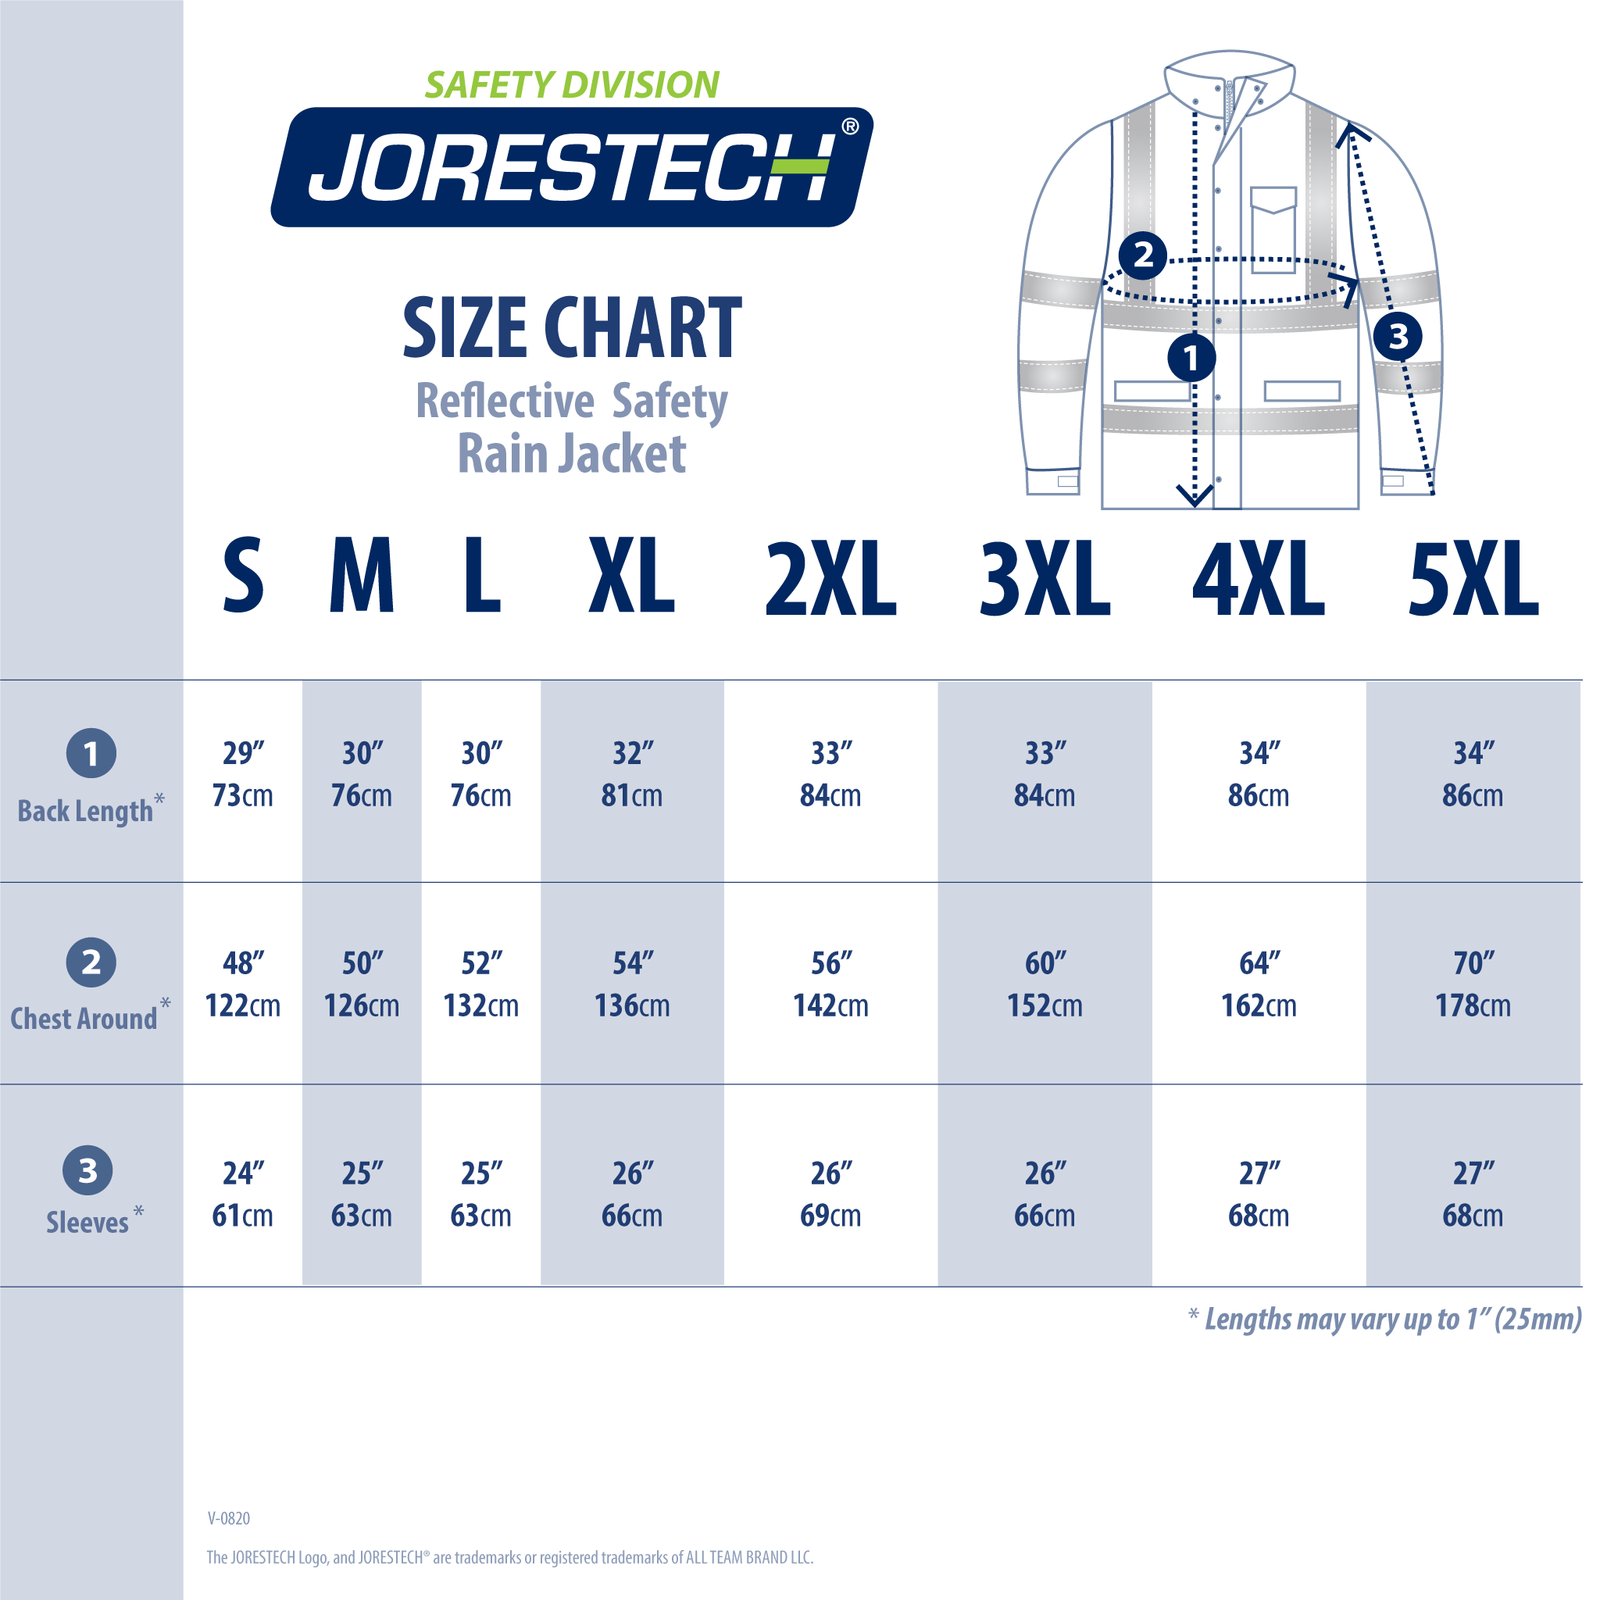 Size chart for the JORESTECH hi vis safety rain jacket with X en the back